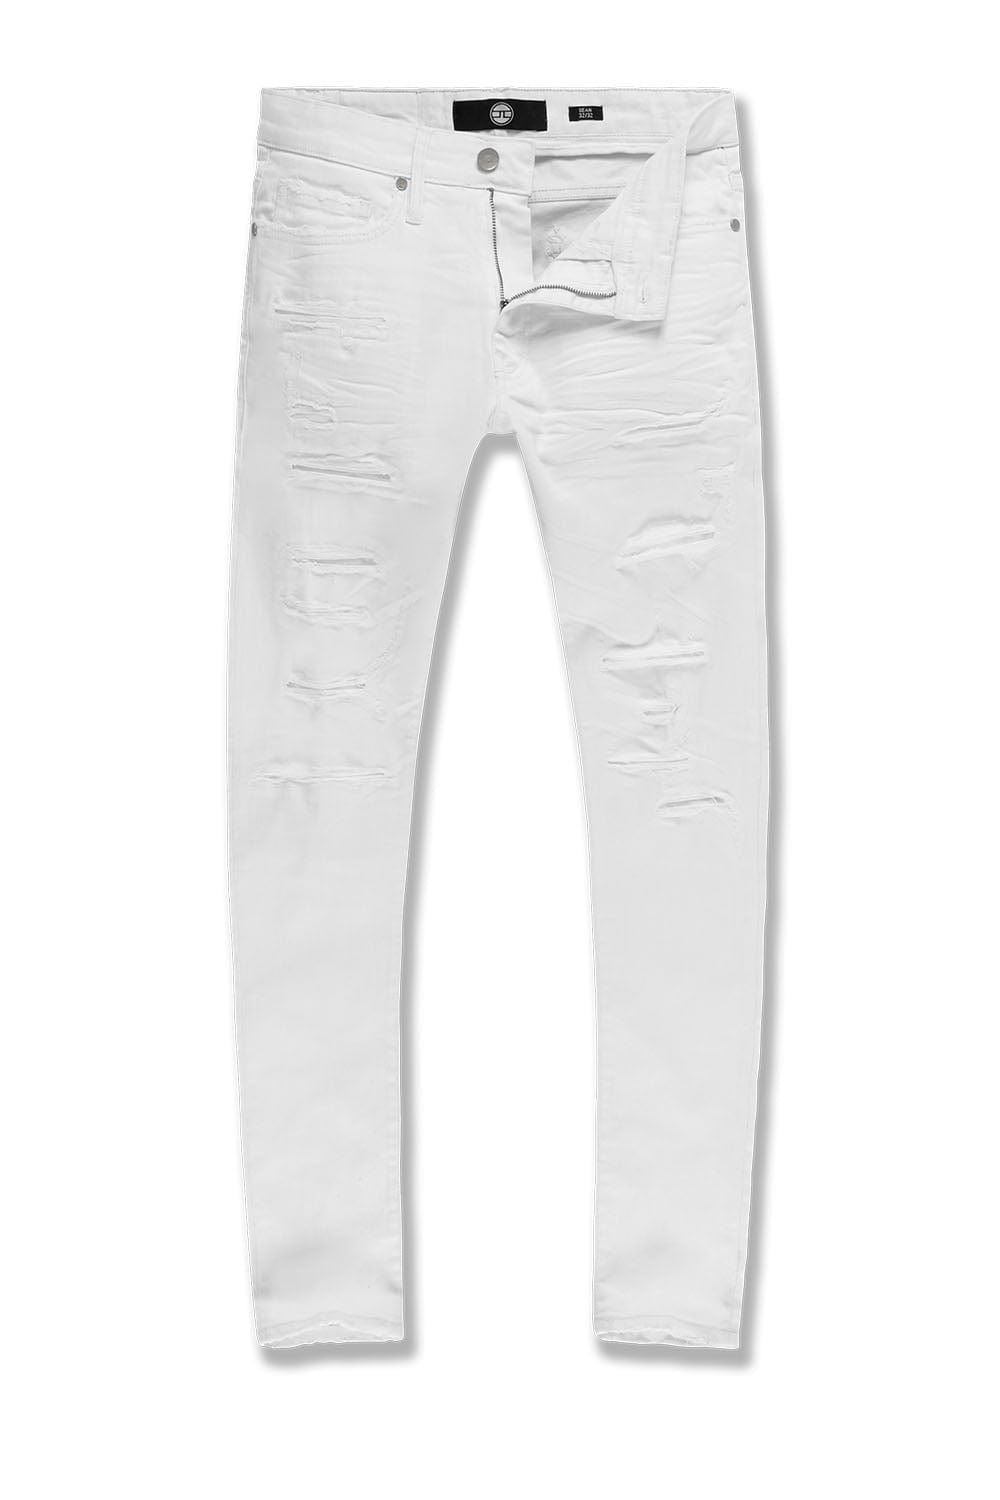 Jordan Craig Sean - Tribeca Twill Pants (Core Colors) White / 30/32